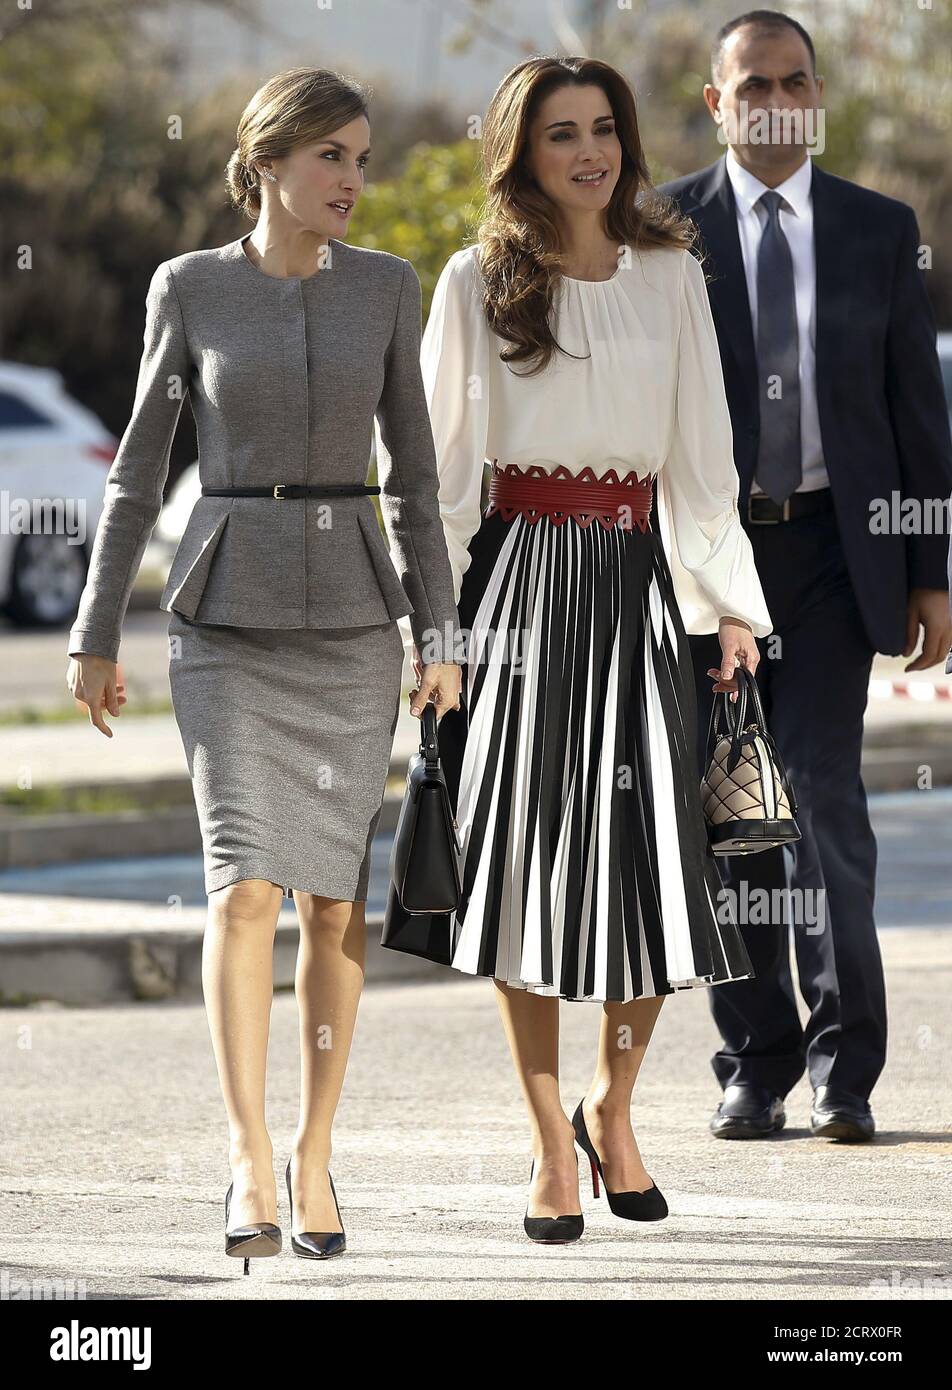 Queen Rania L Fotos e Imágenes de stock - Página 4 - Alamy